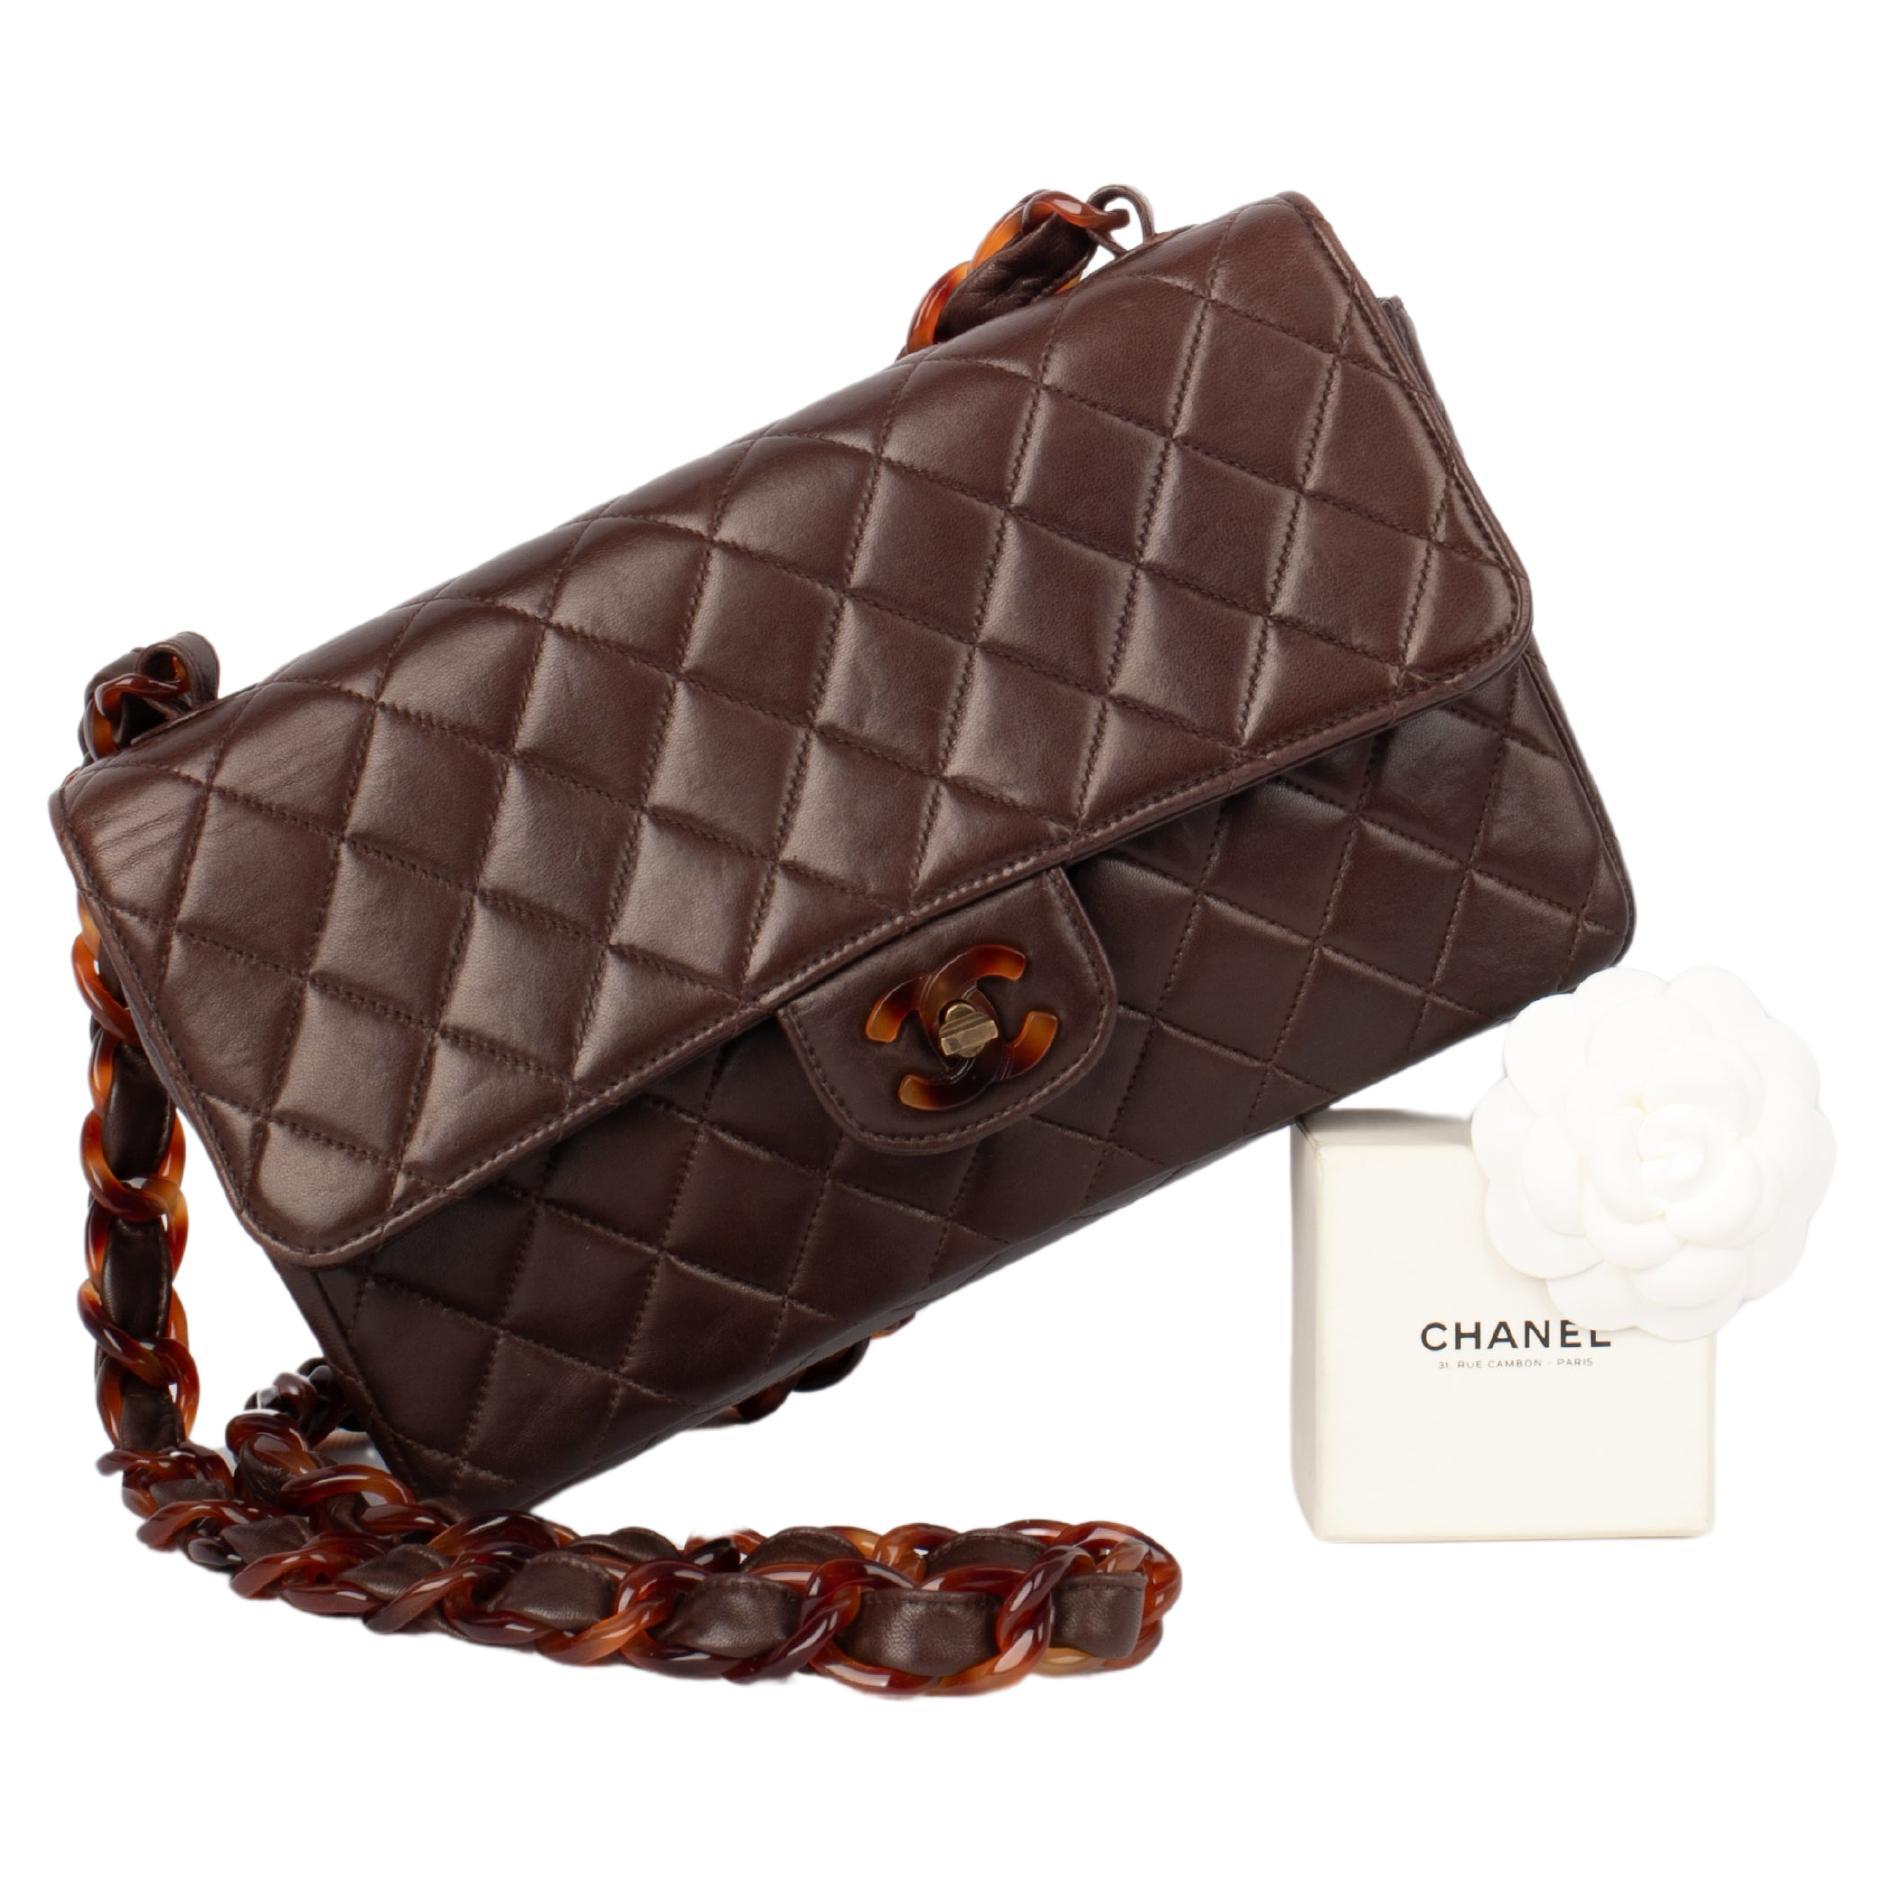 Chanel leather and bakelite bag